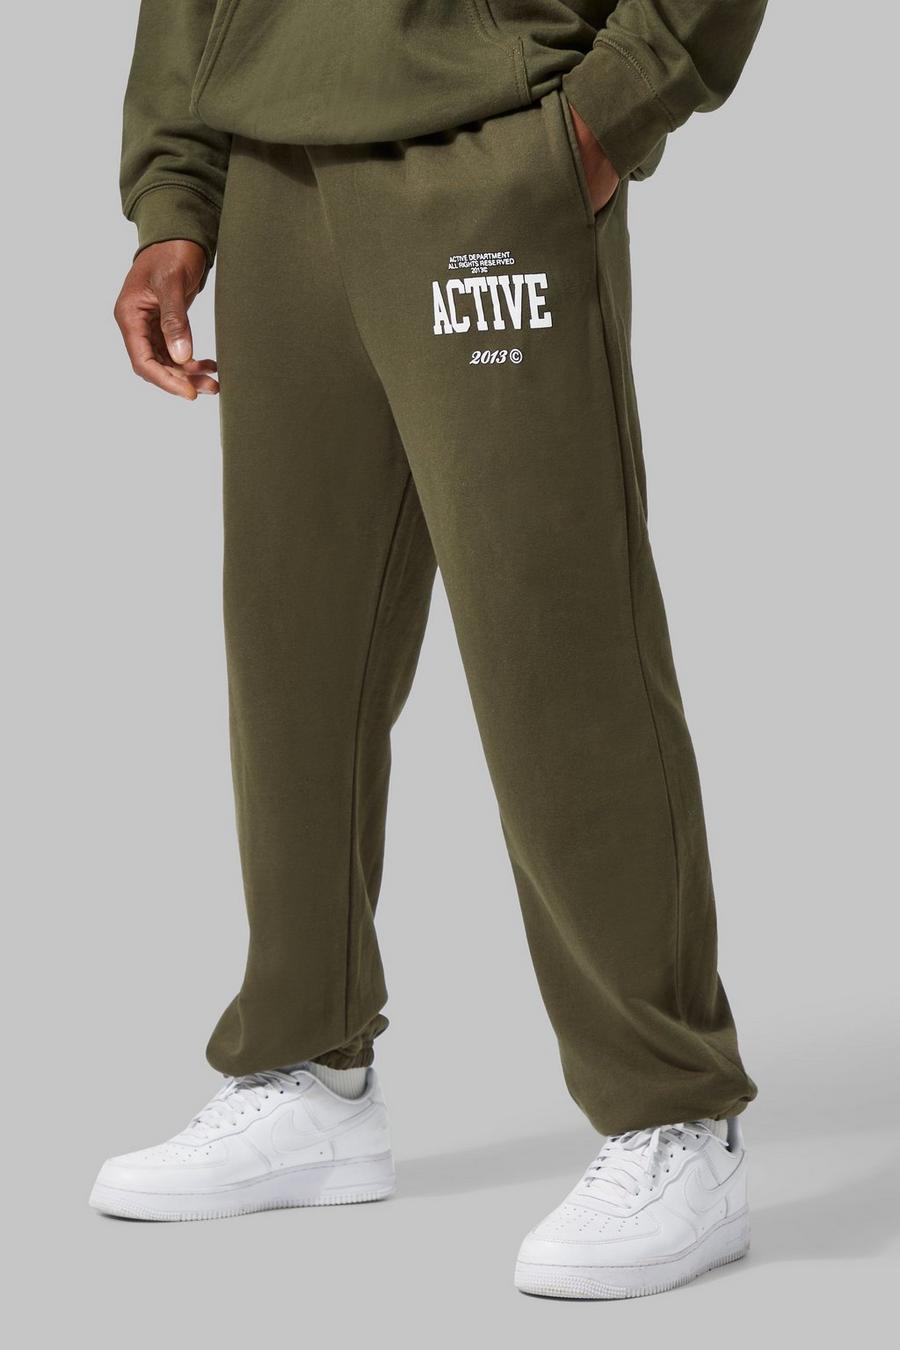 Pantaloni tuta Man Active con stampa stile Varsity, Khaki caqui